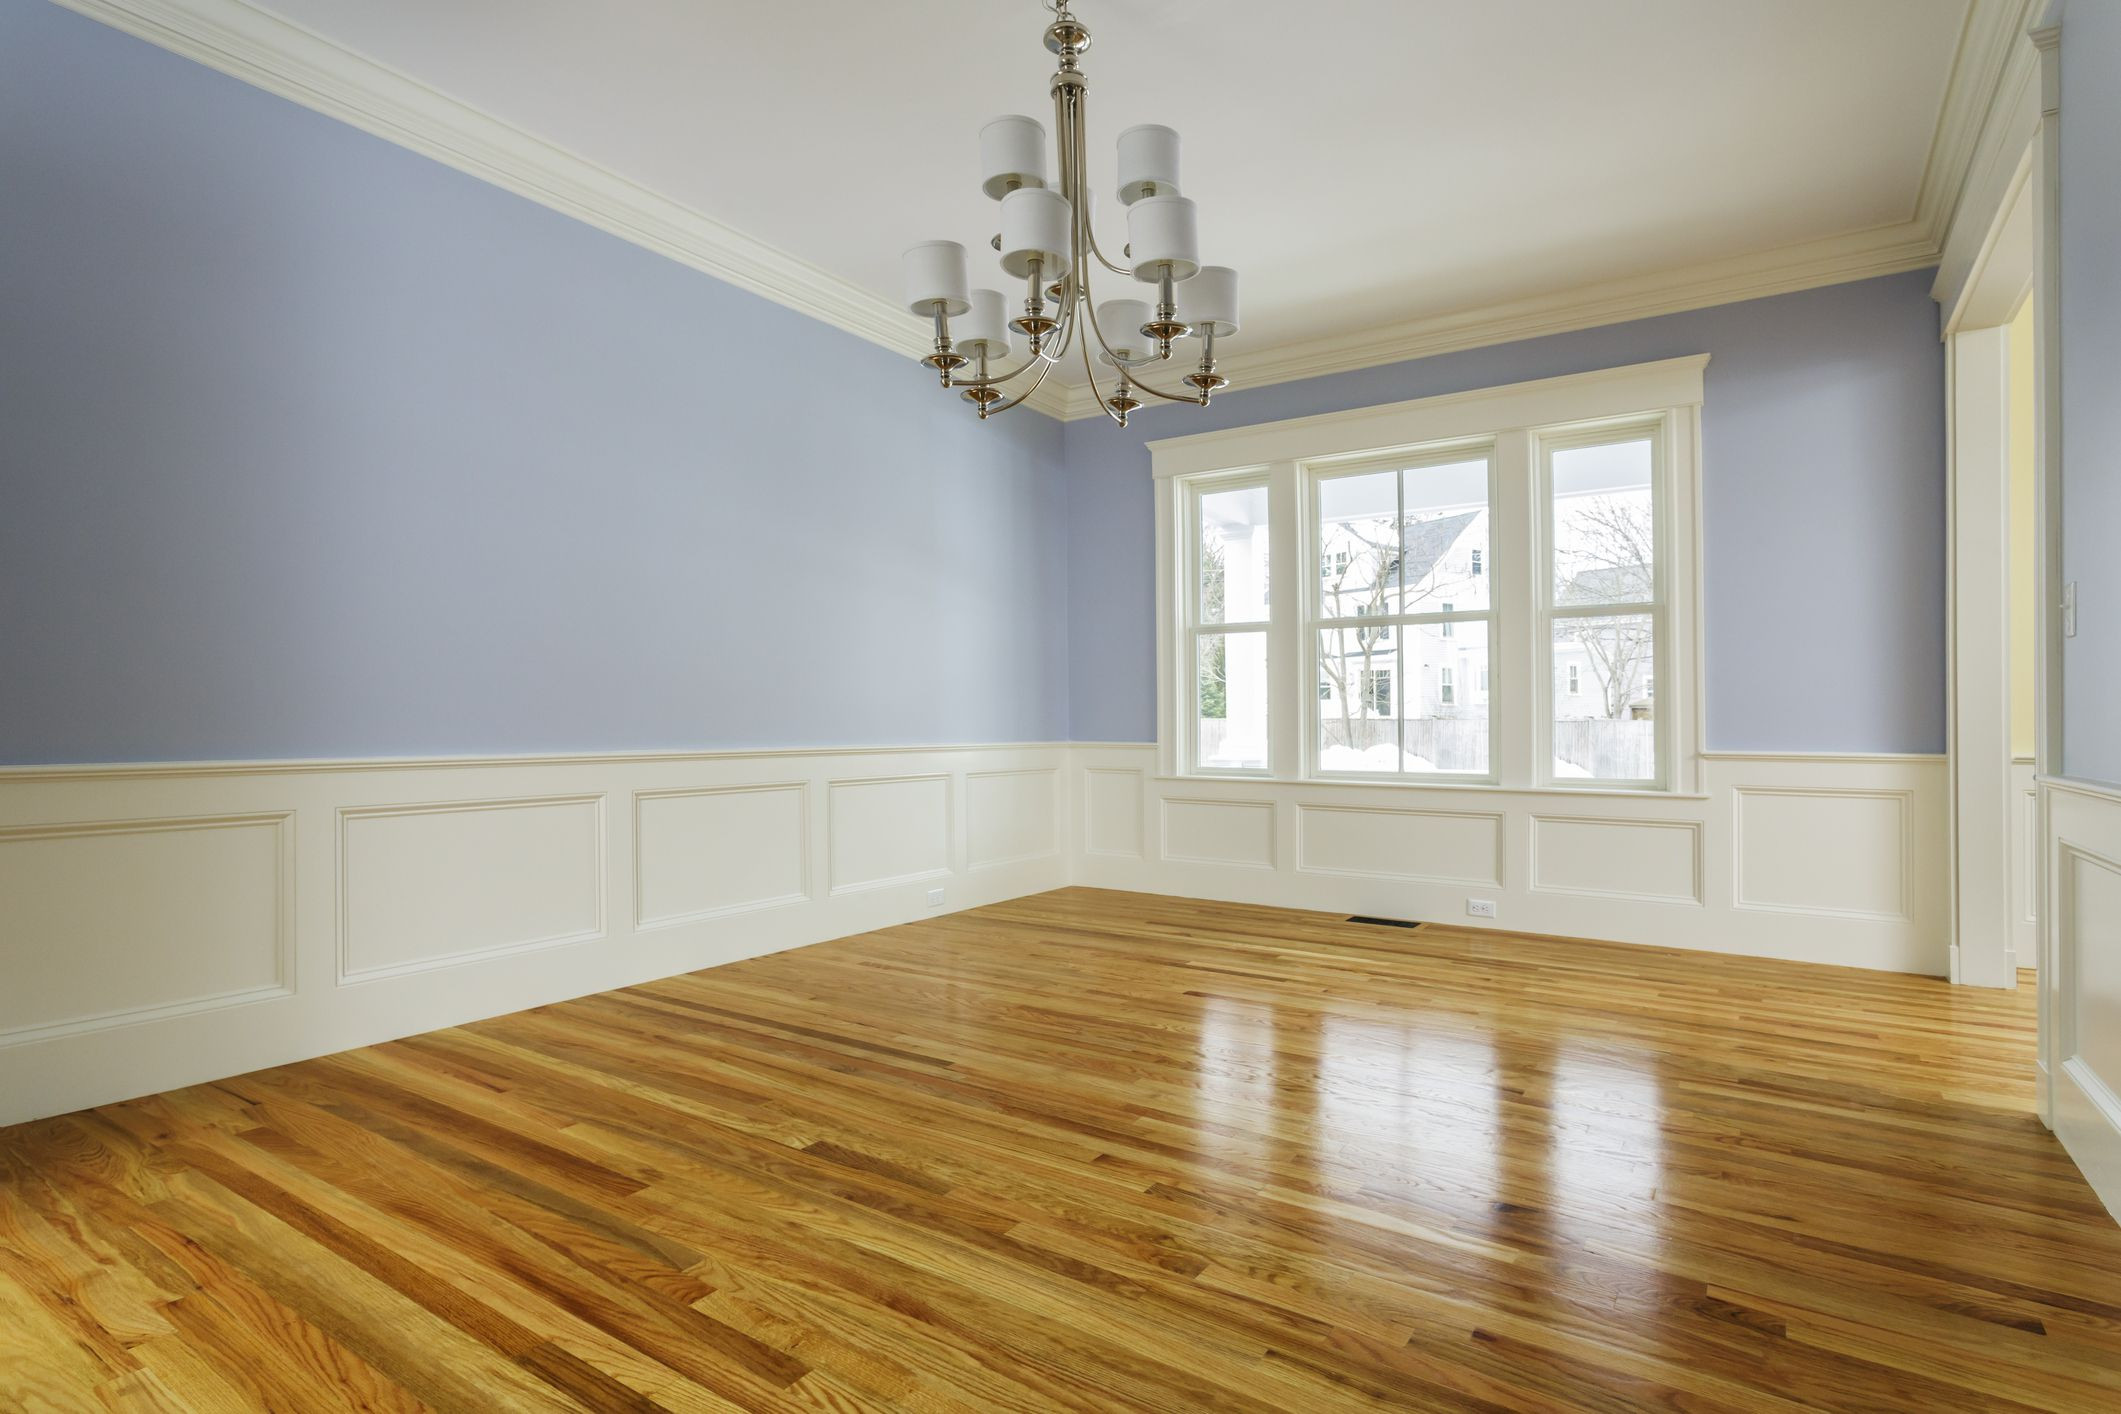 hardwood floor finishes colors of hardwood flooring finish stain decorative treatments throughout hardwood 58f6bf9b5f9b581d59754f48